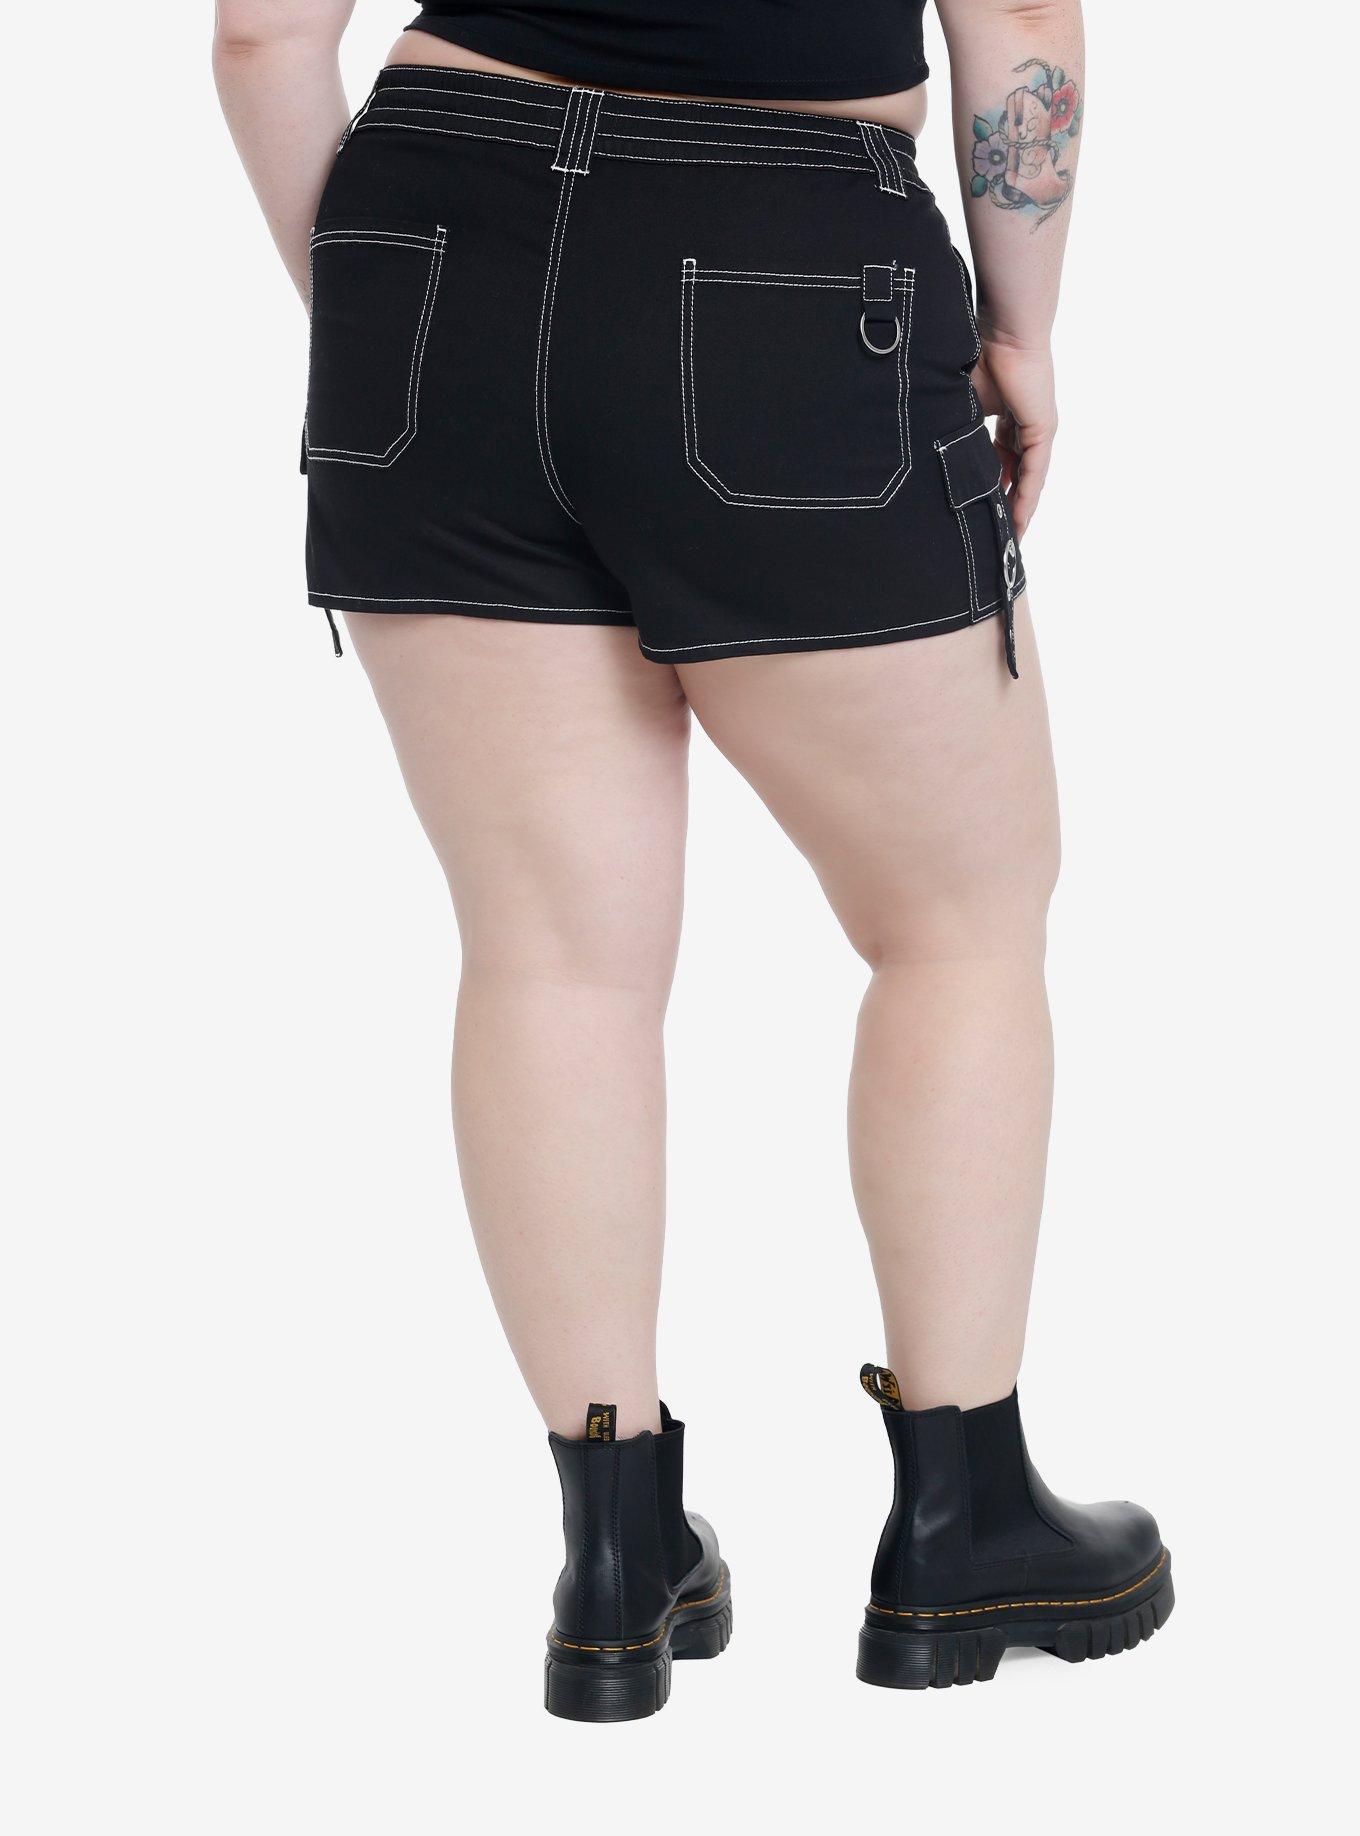 Hardware Grommet Black Cargo Shorts Plus Size, BLACK, alternate